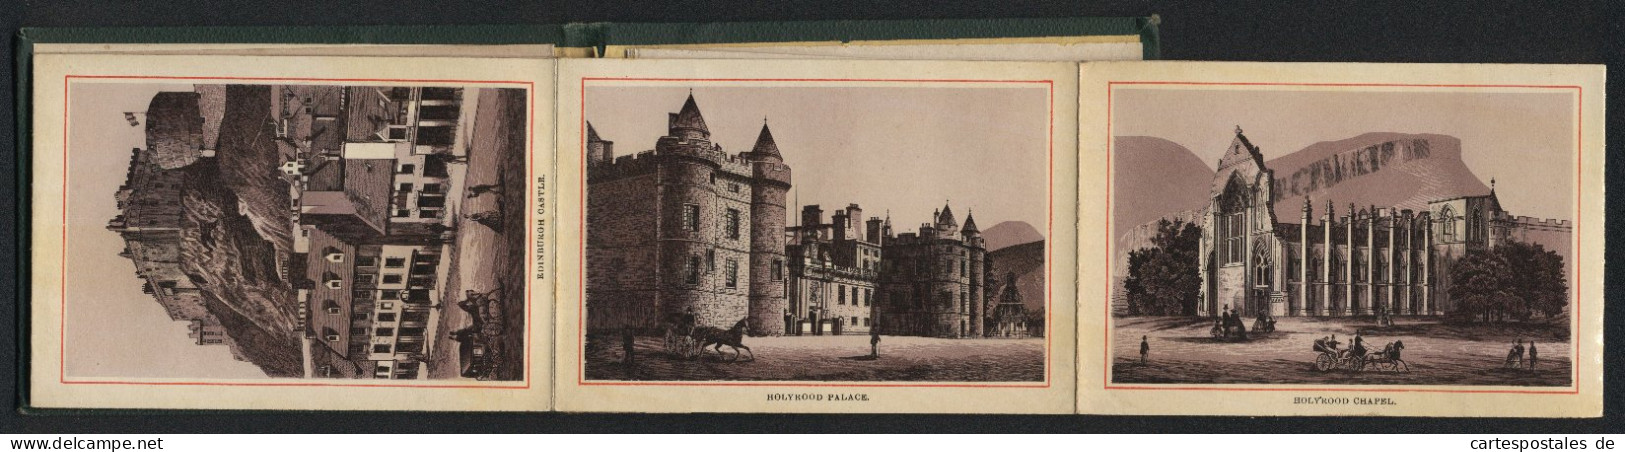 Leporello-Album Edinburgh Mit 12 Lithographie-Ansichten, Princes Street, Old Town, Scott Monument, John Knox House  - Lithographien